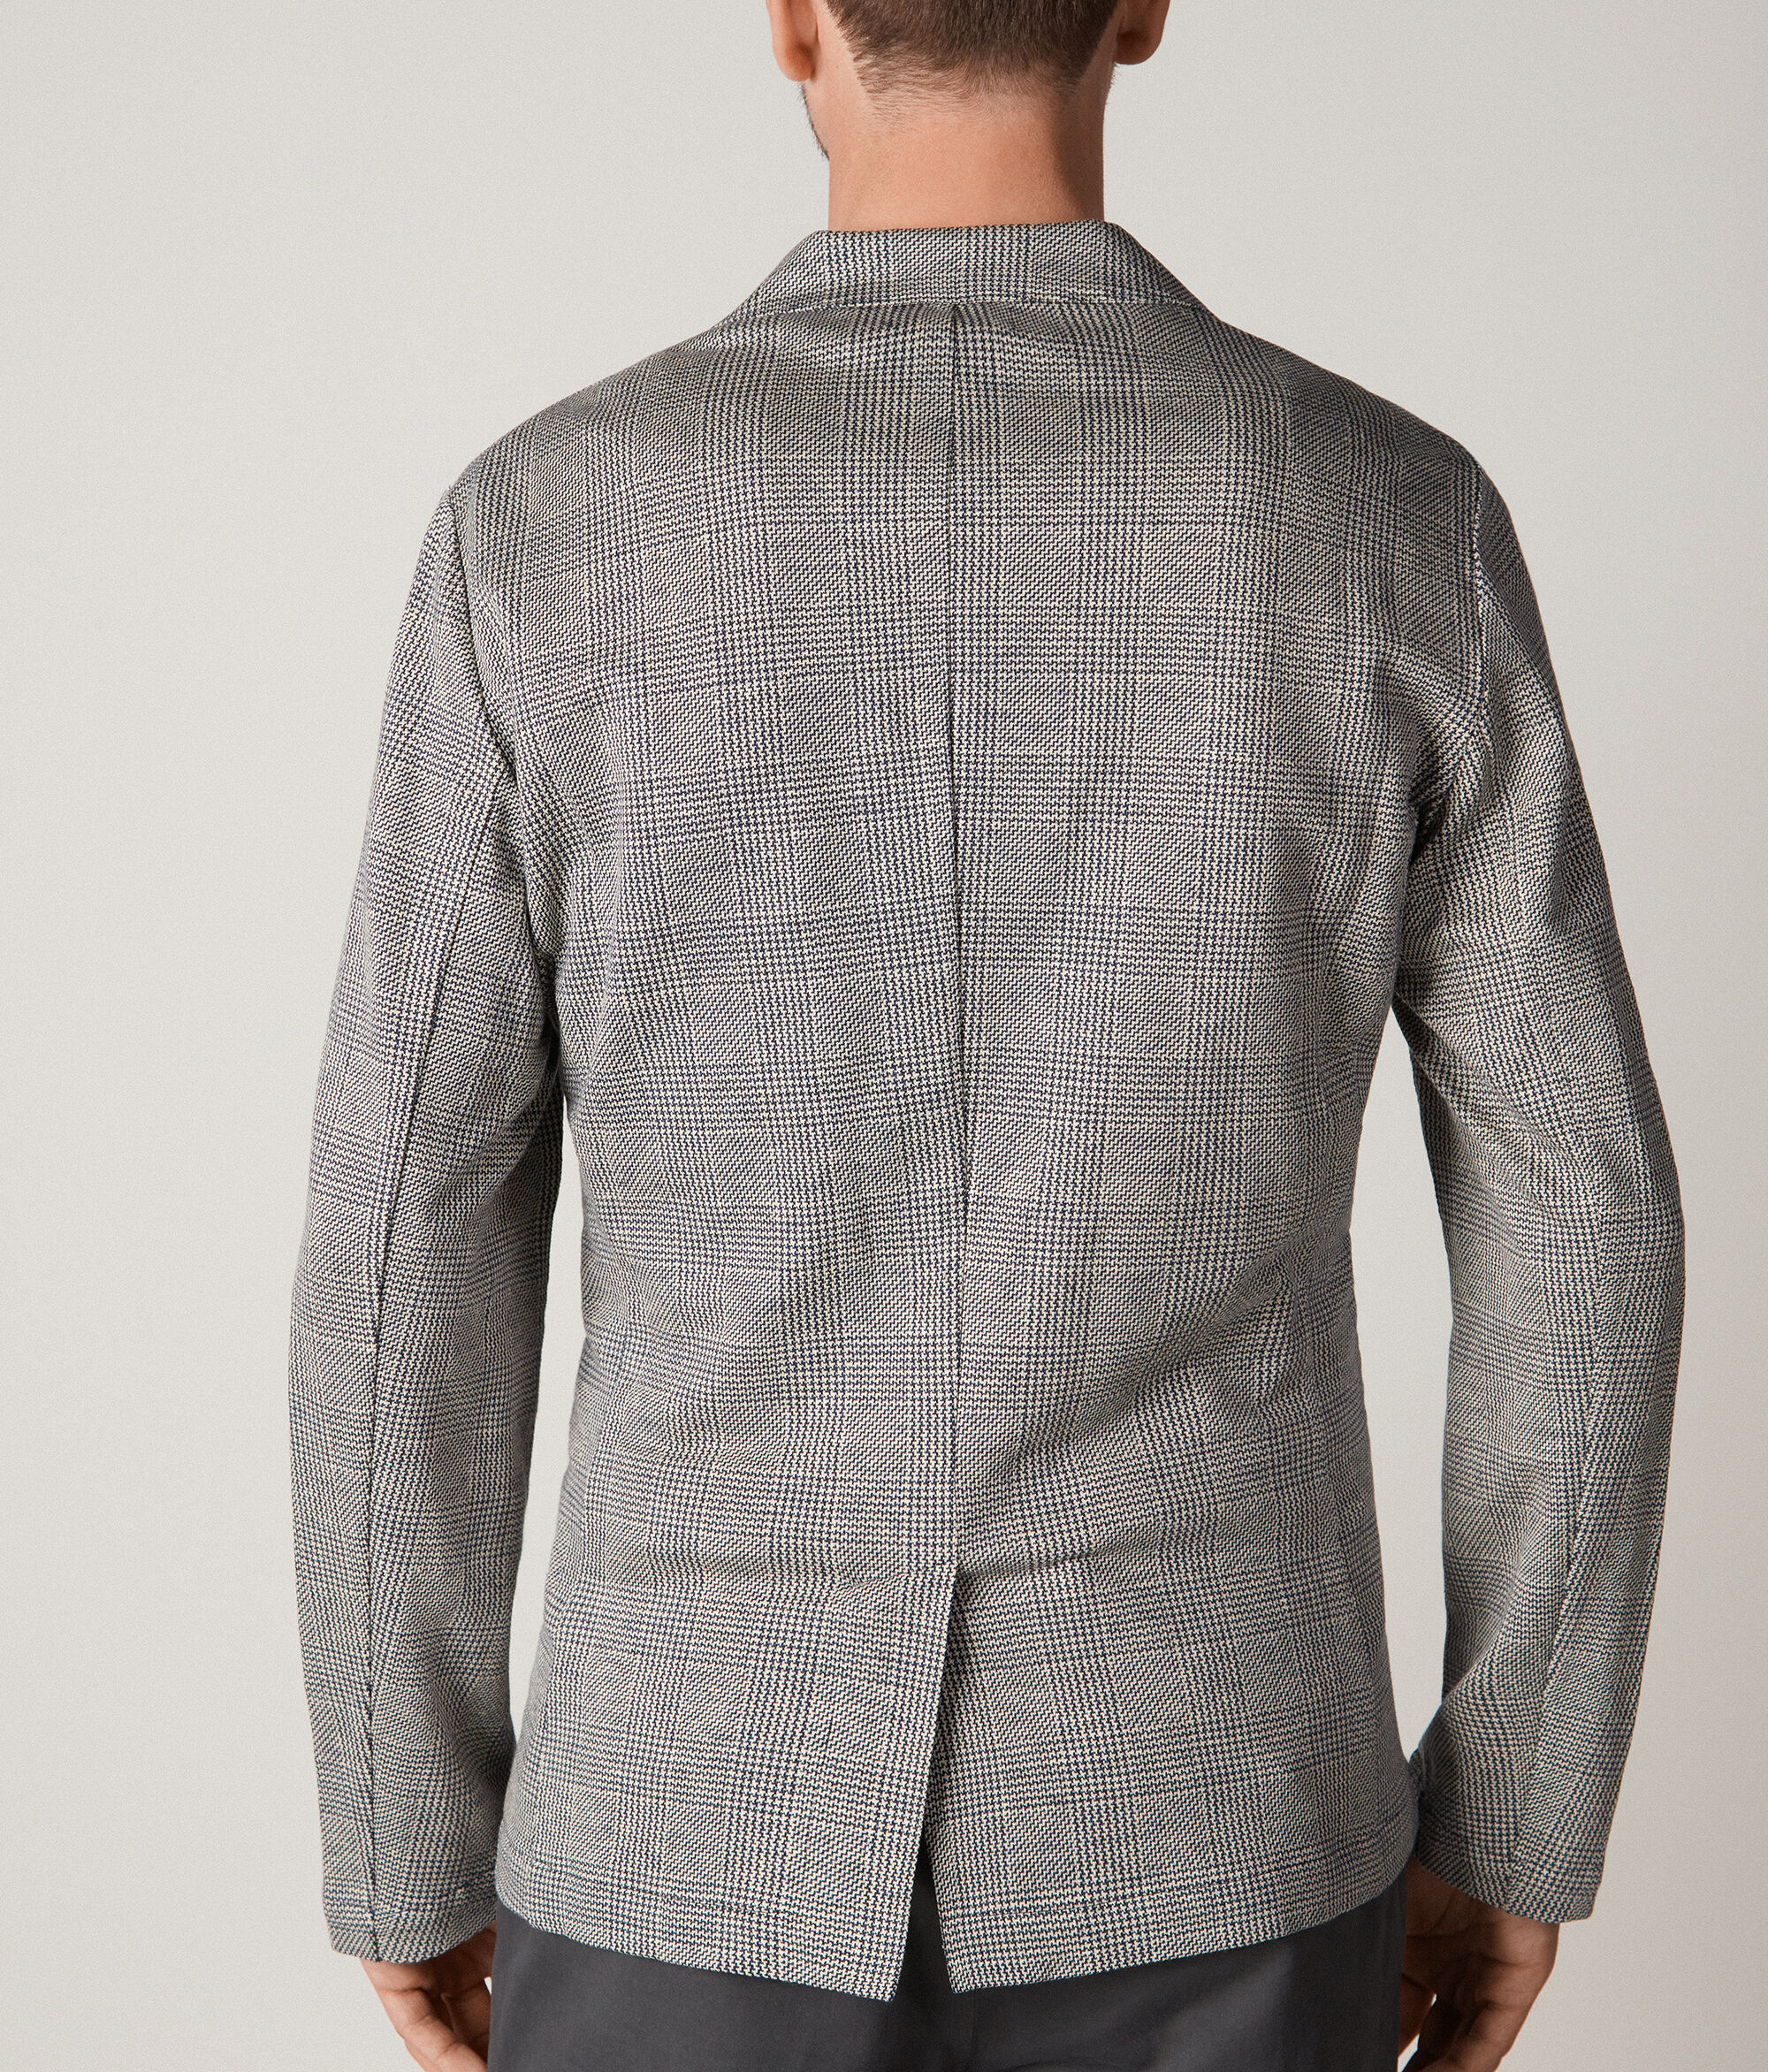 Cotton-Linen Jersey Glen Plaid Jacket